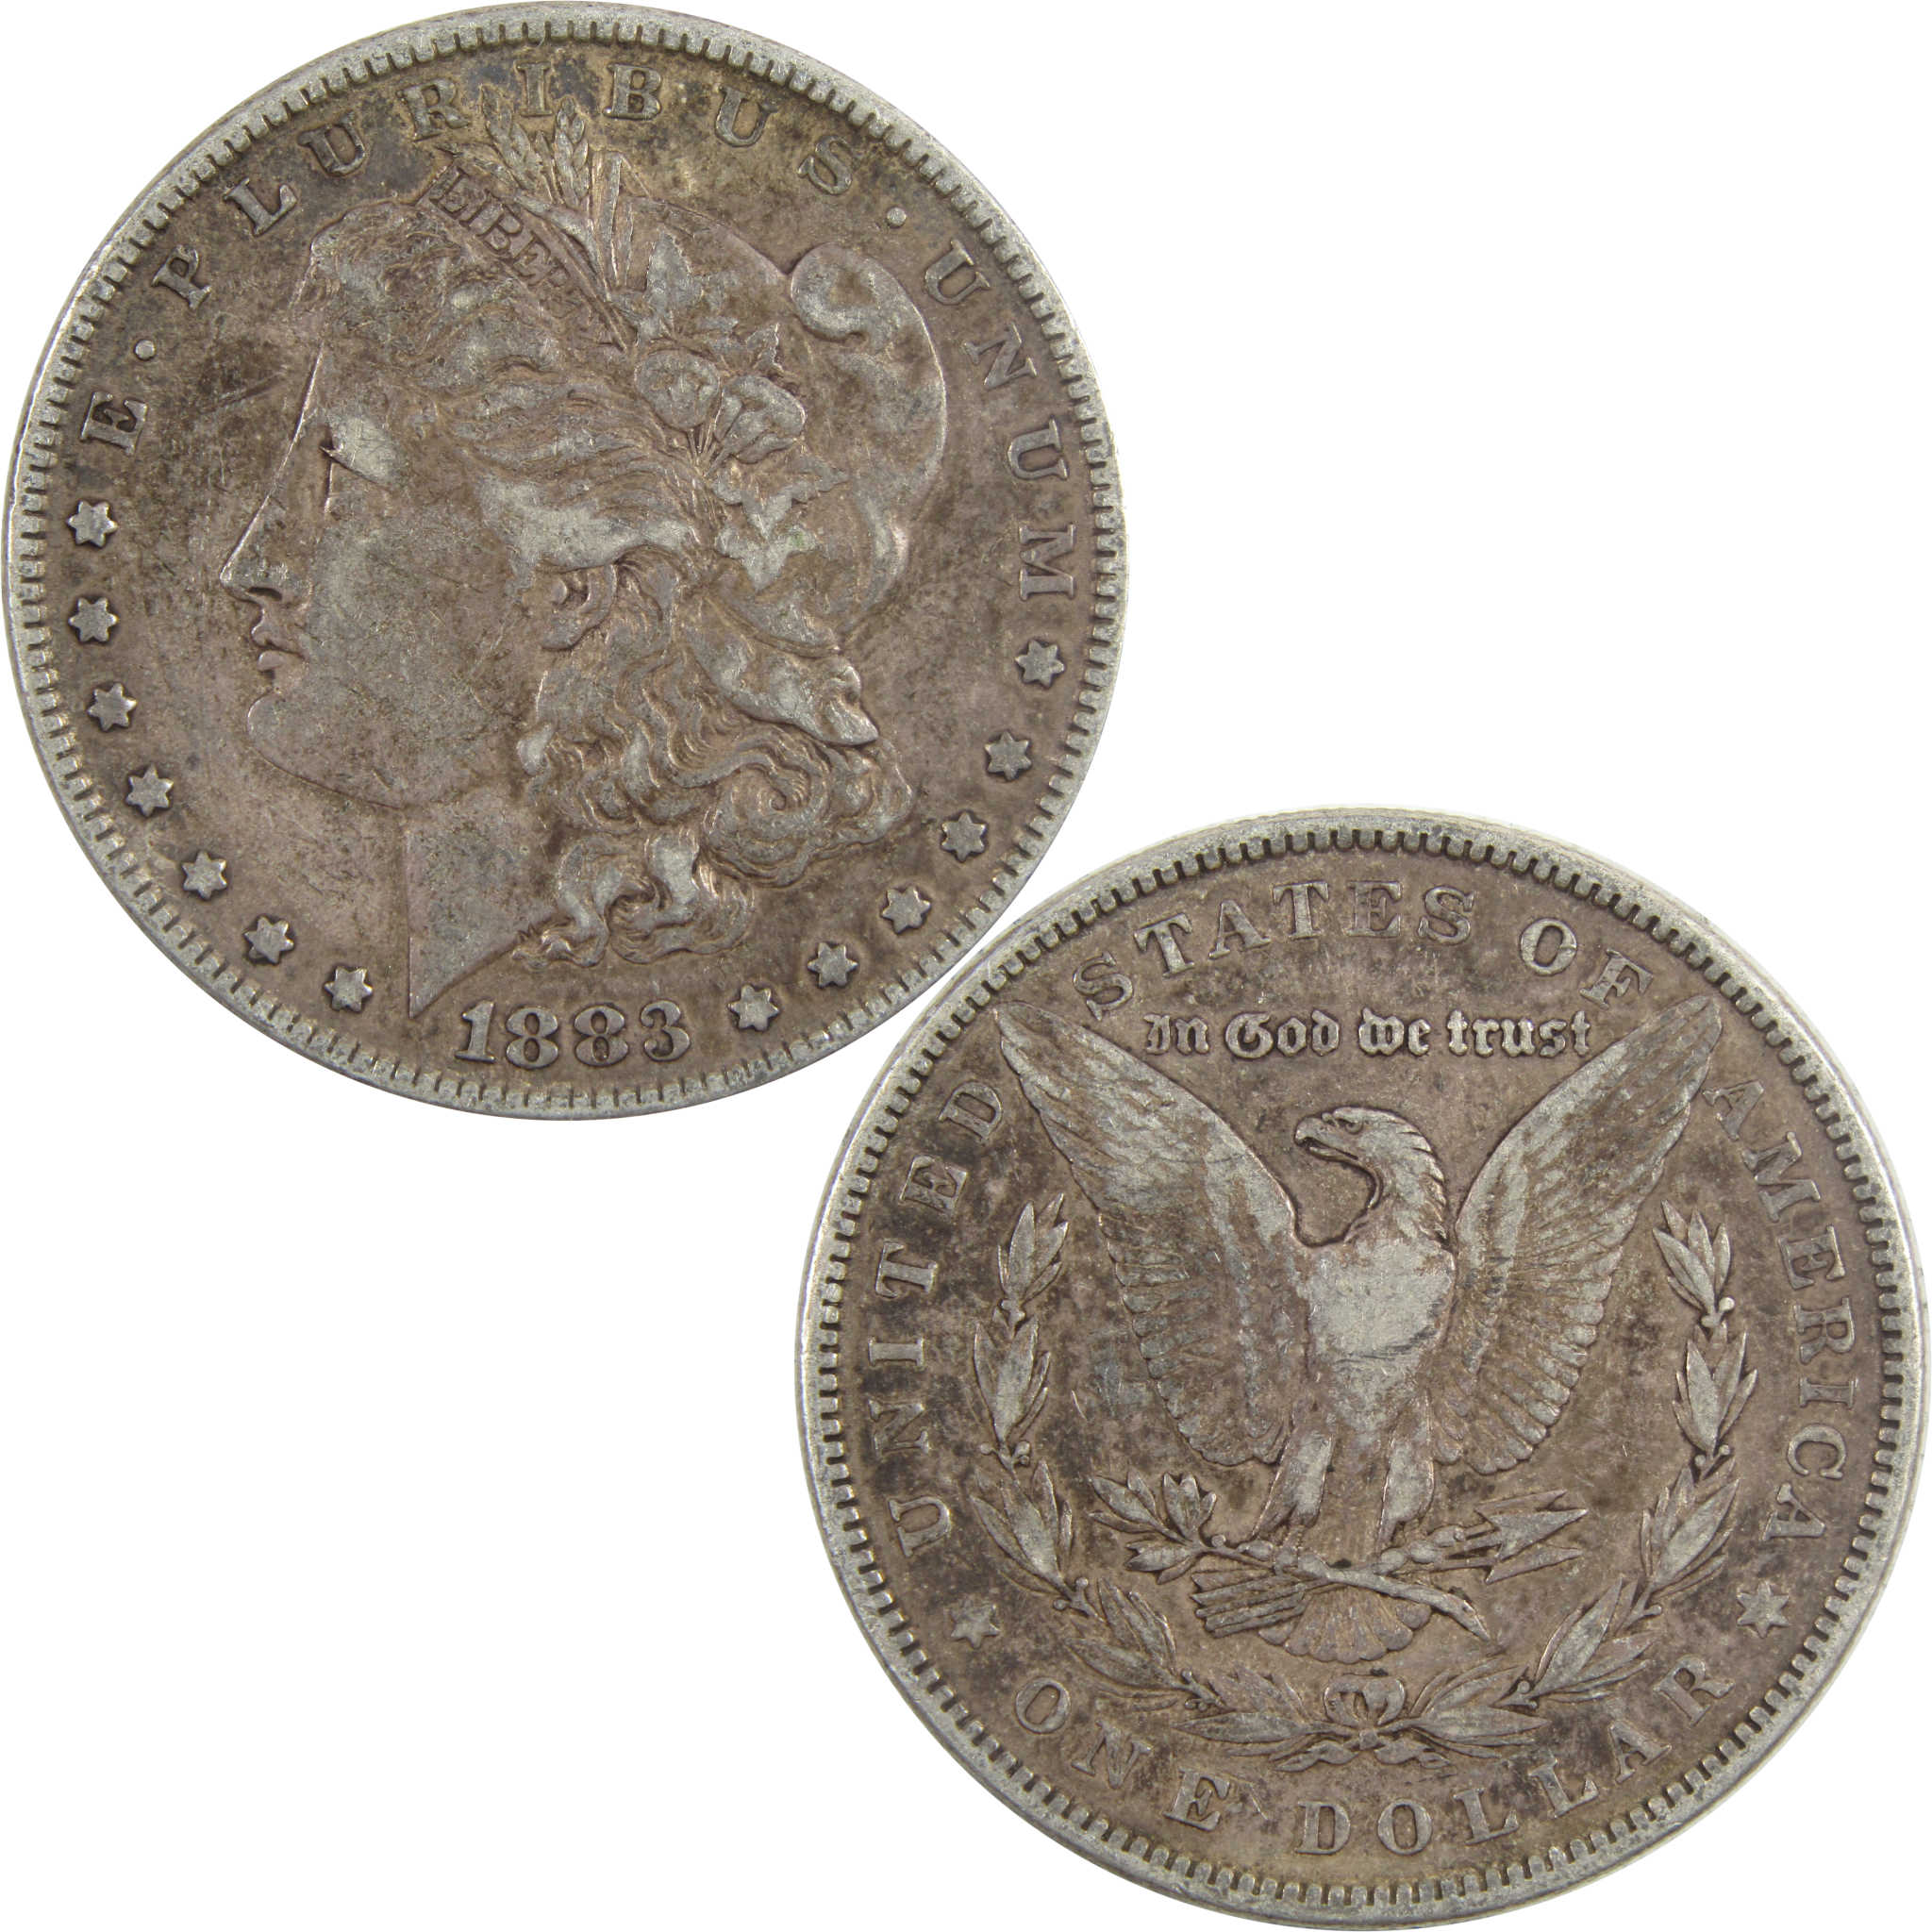 1883 Morgan Dollar VF Very Fine 90% Silver $1 Coin SKU:I5584 - Morgan coin - Morgan silver dollar - Morgan silver dollar for sale - Profile Coins &amp; Collectibles